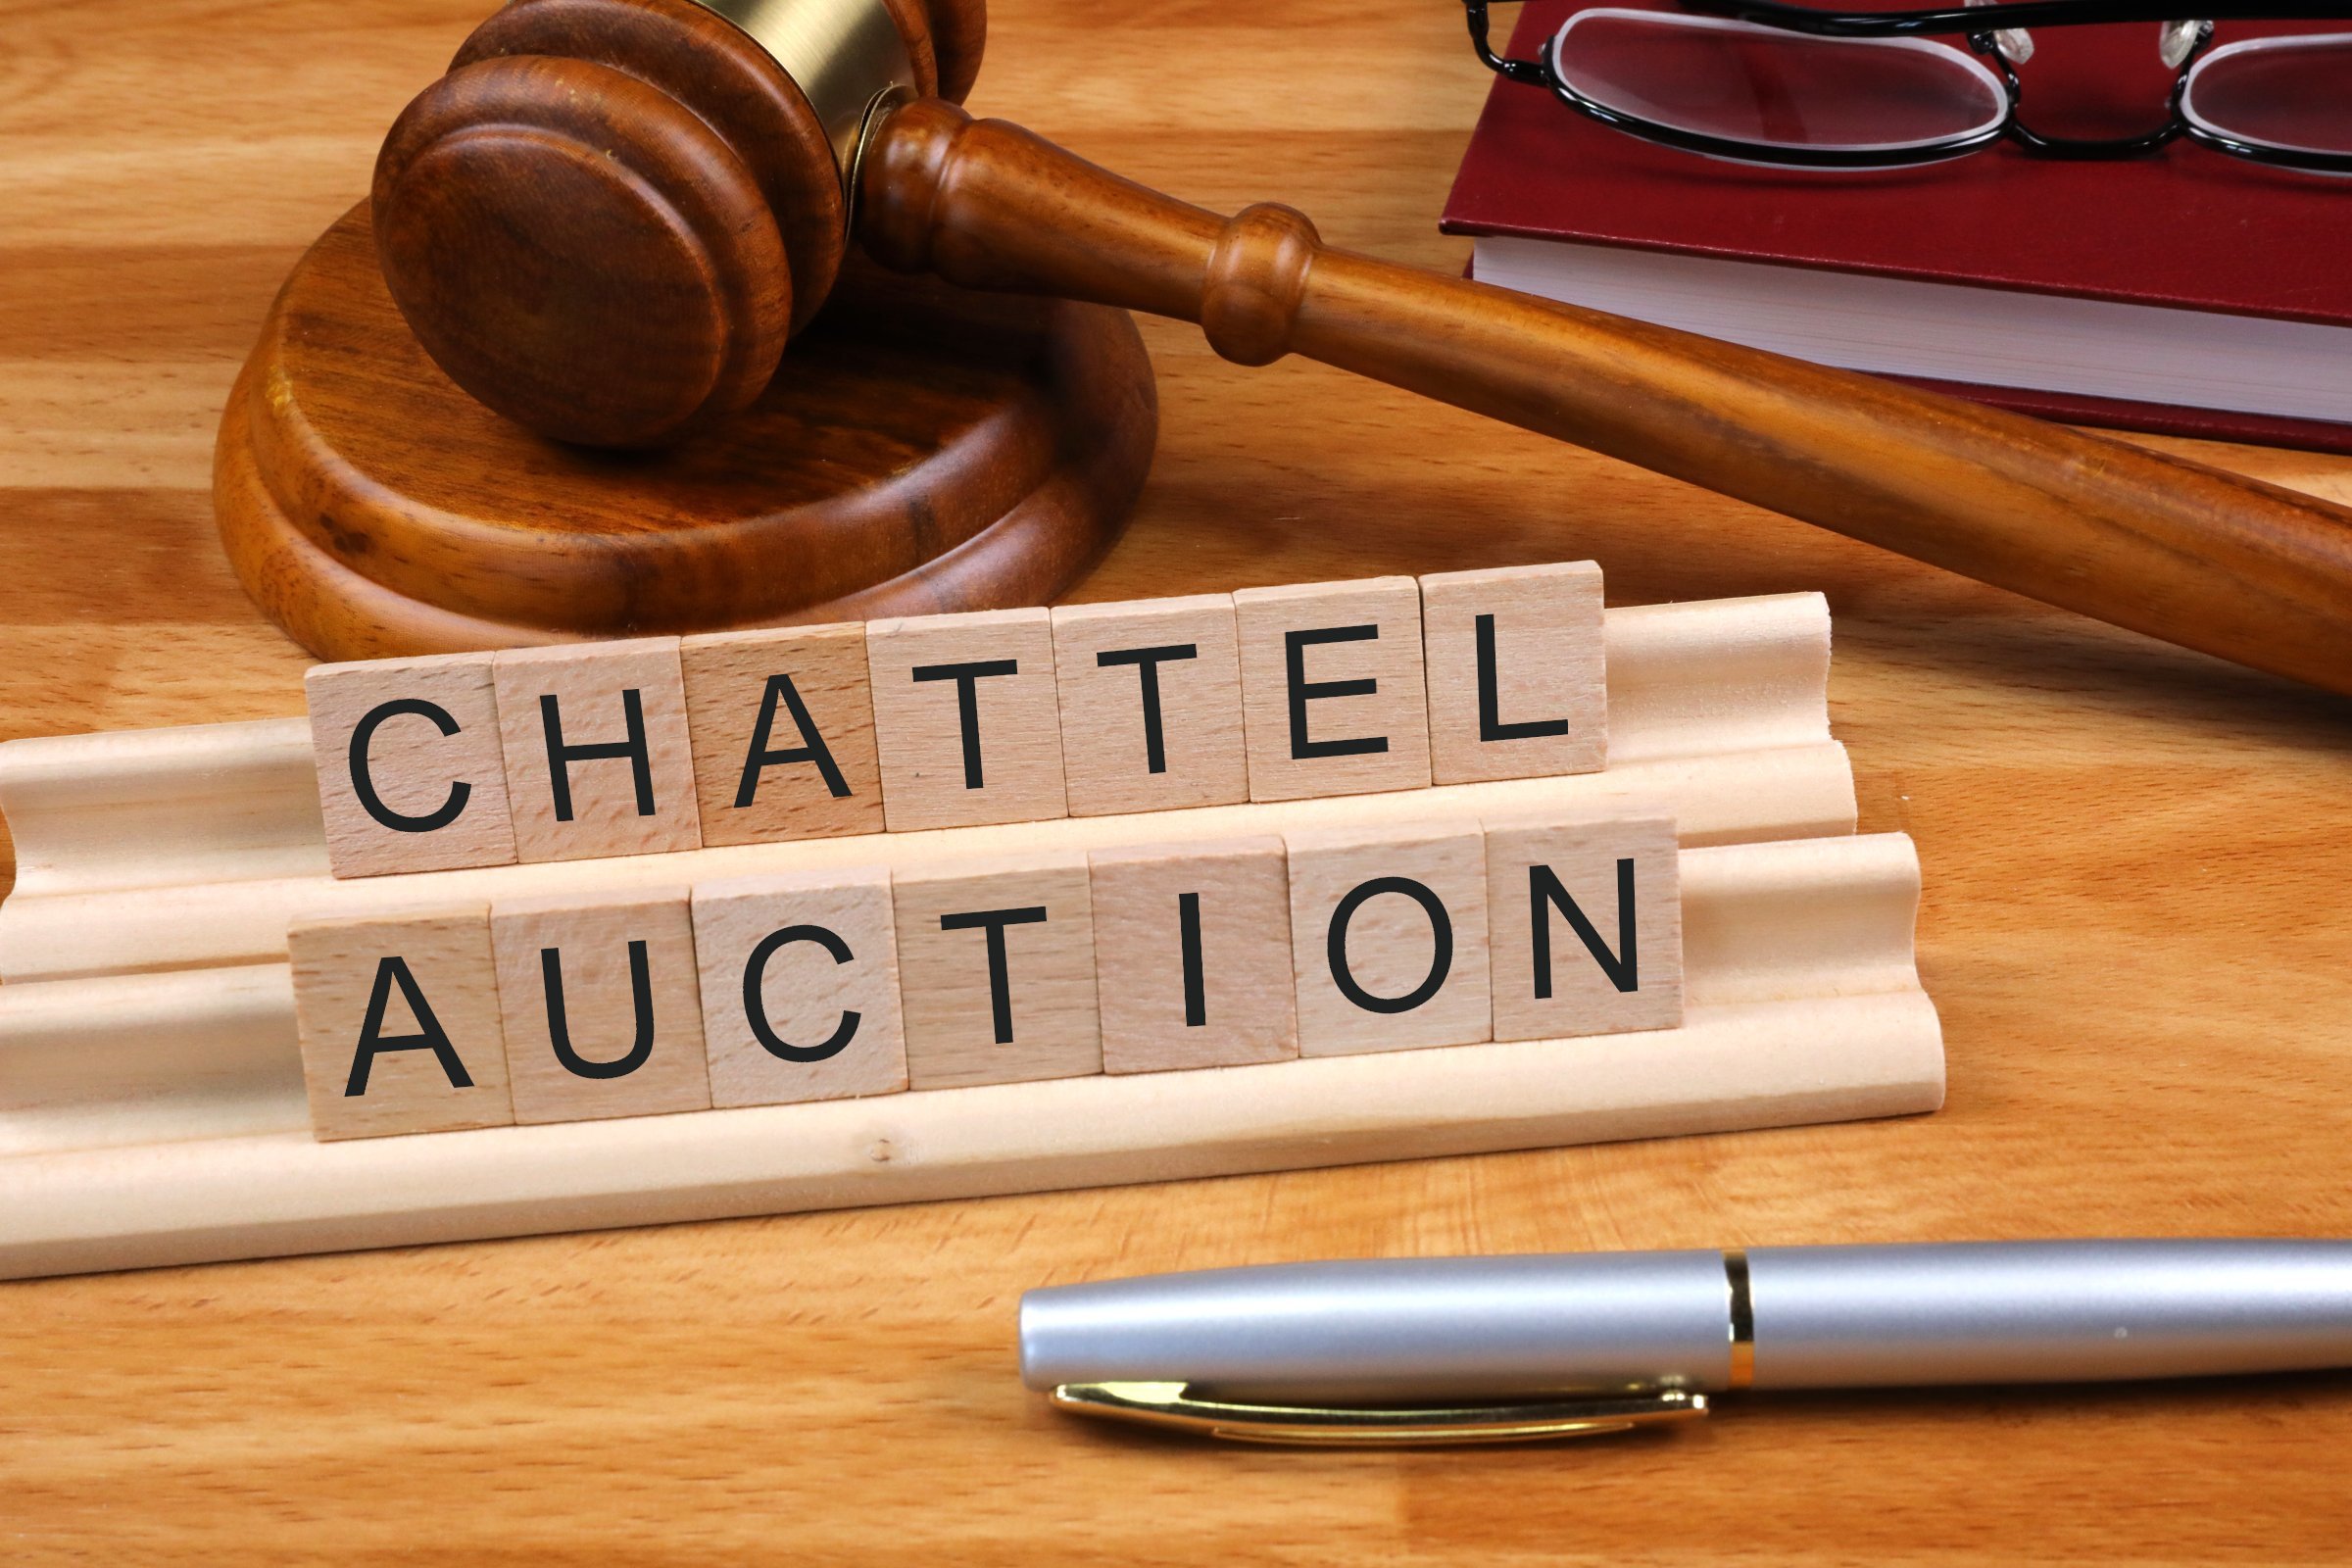 Chattel Auction